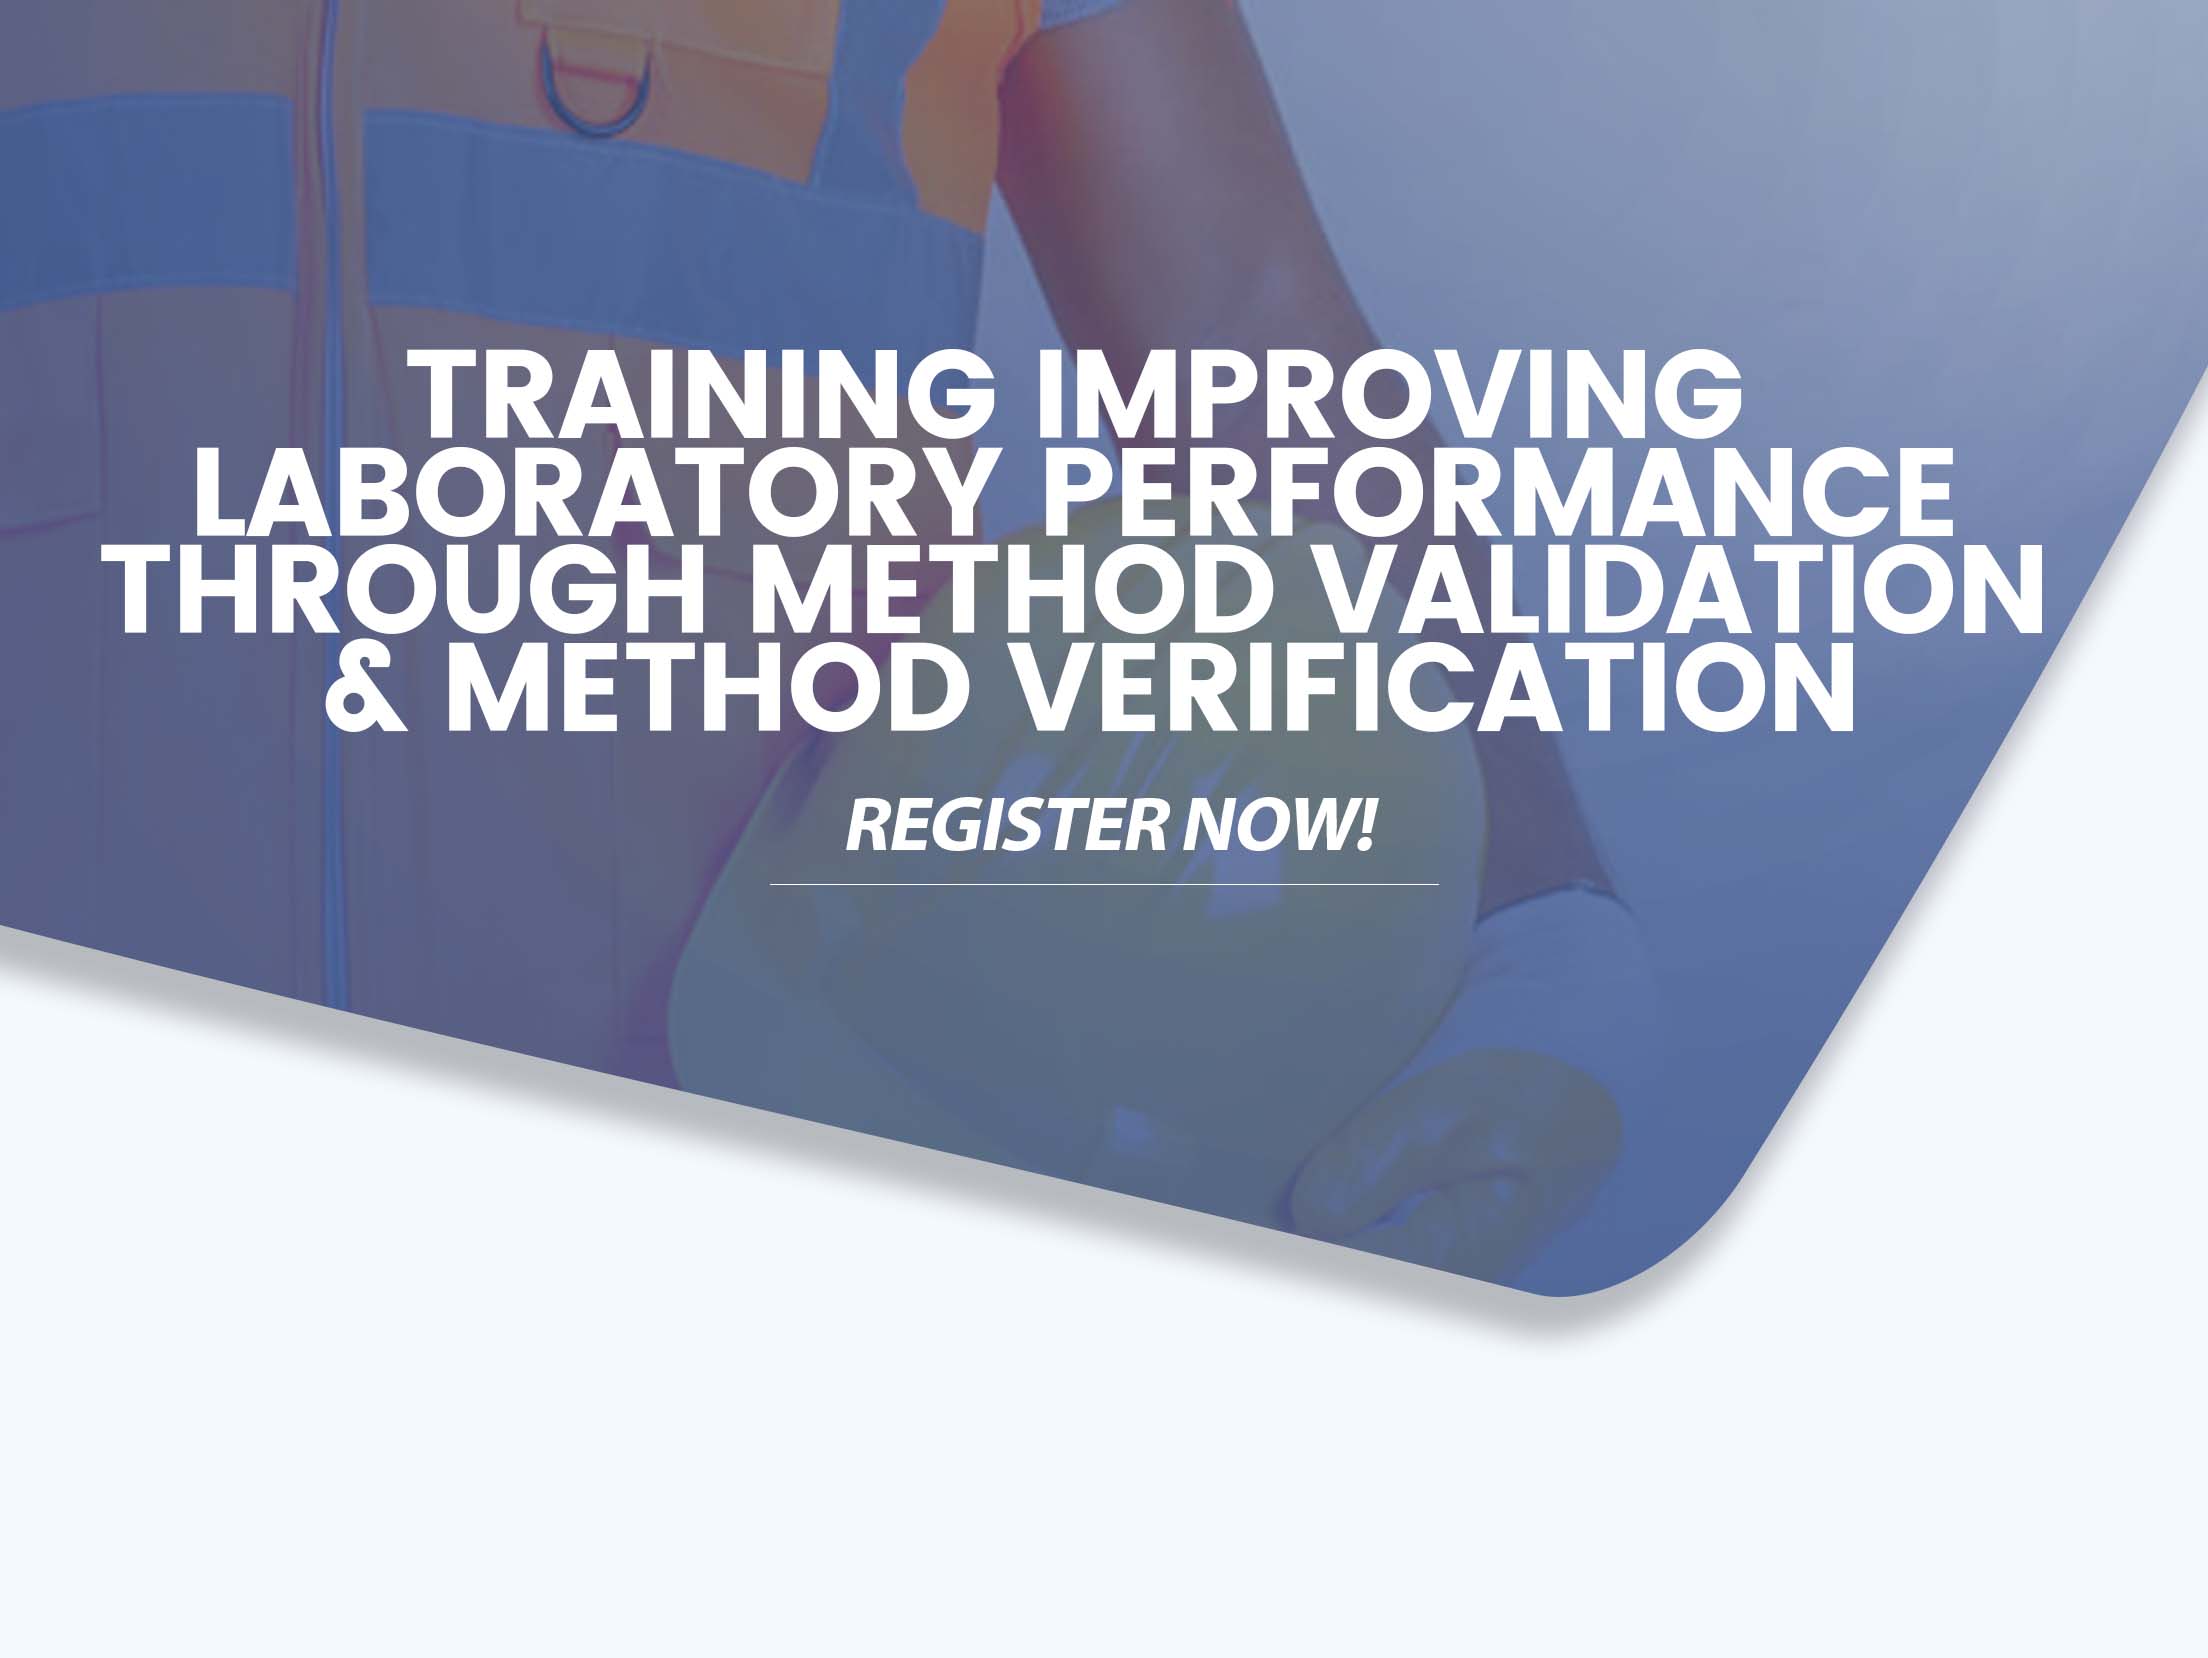 Training Improving Laboratory Performance Through Method Validation & Method Verification